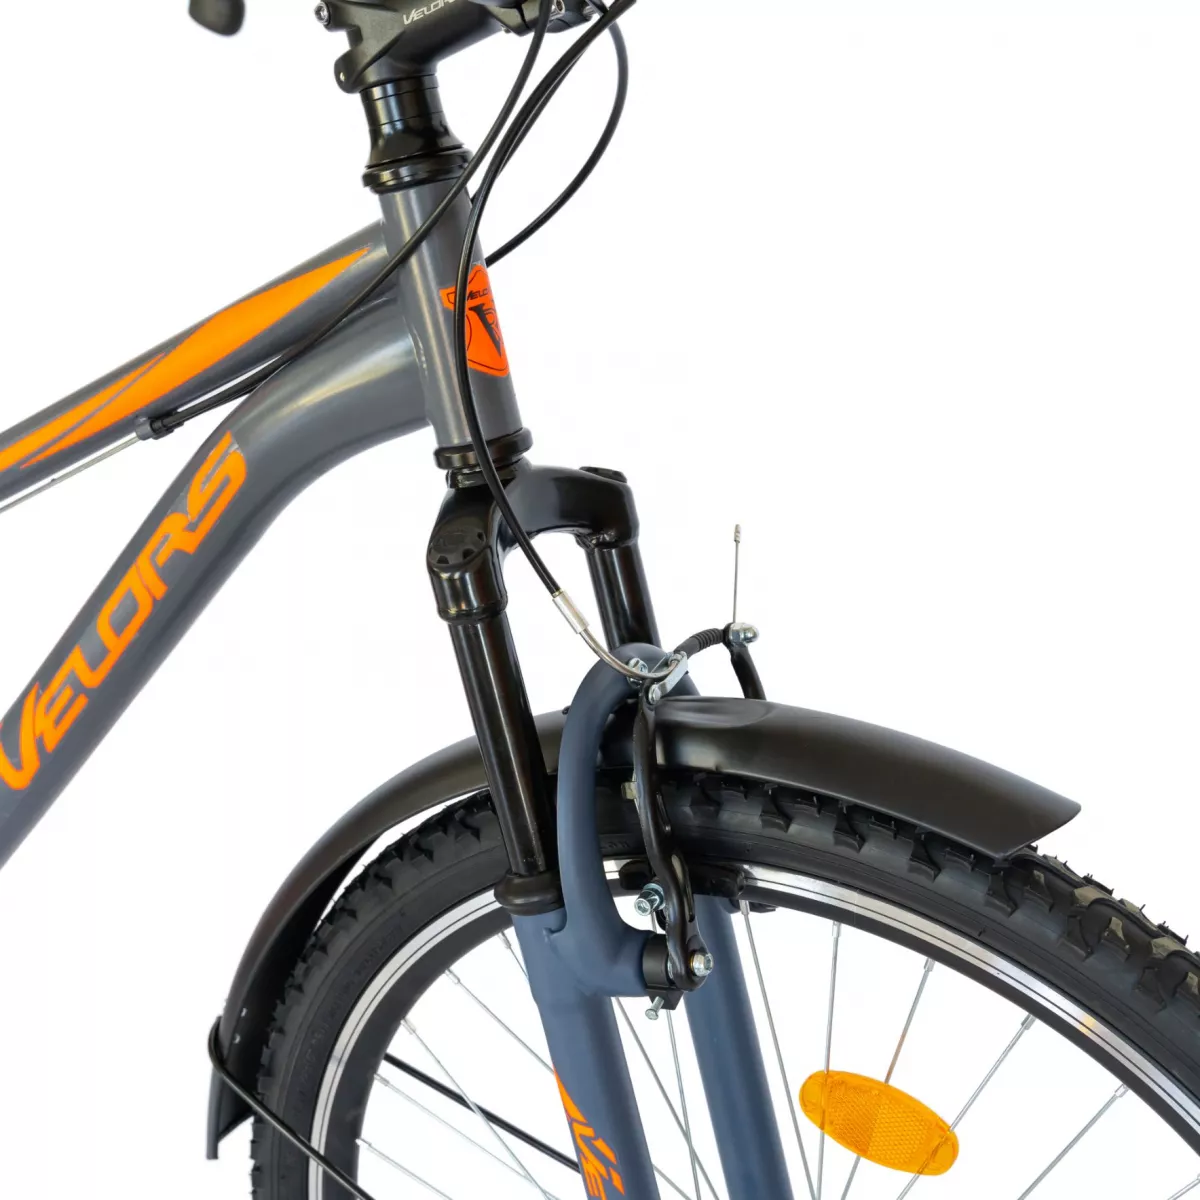 Bicicleta CITY Velors V2633B, roata 26 inch, echipare Shimano, 18 viteze, culoare gri/portocaliu